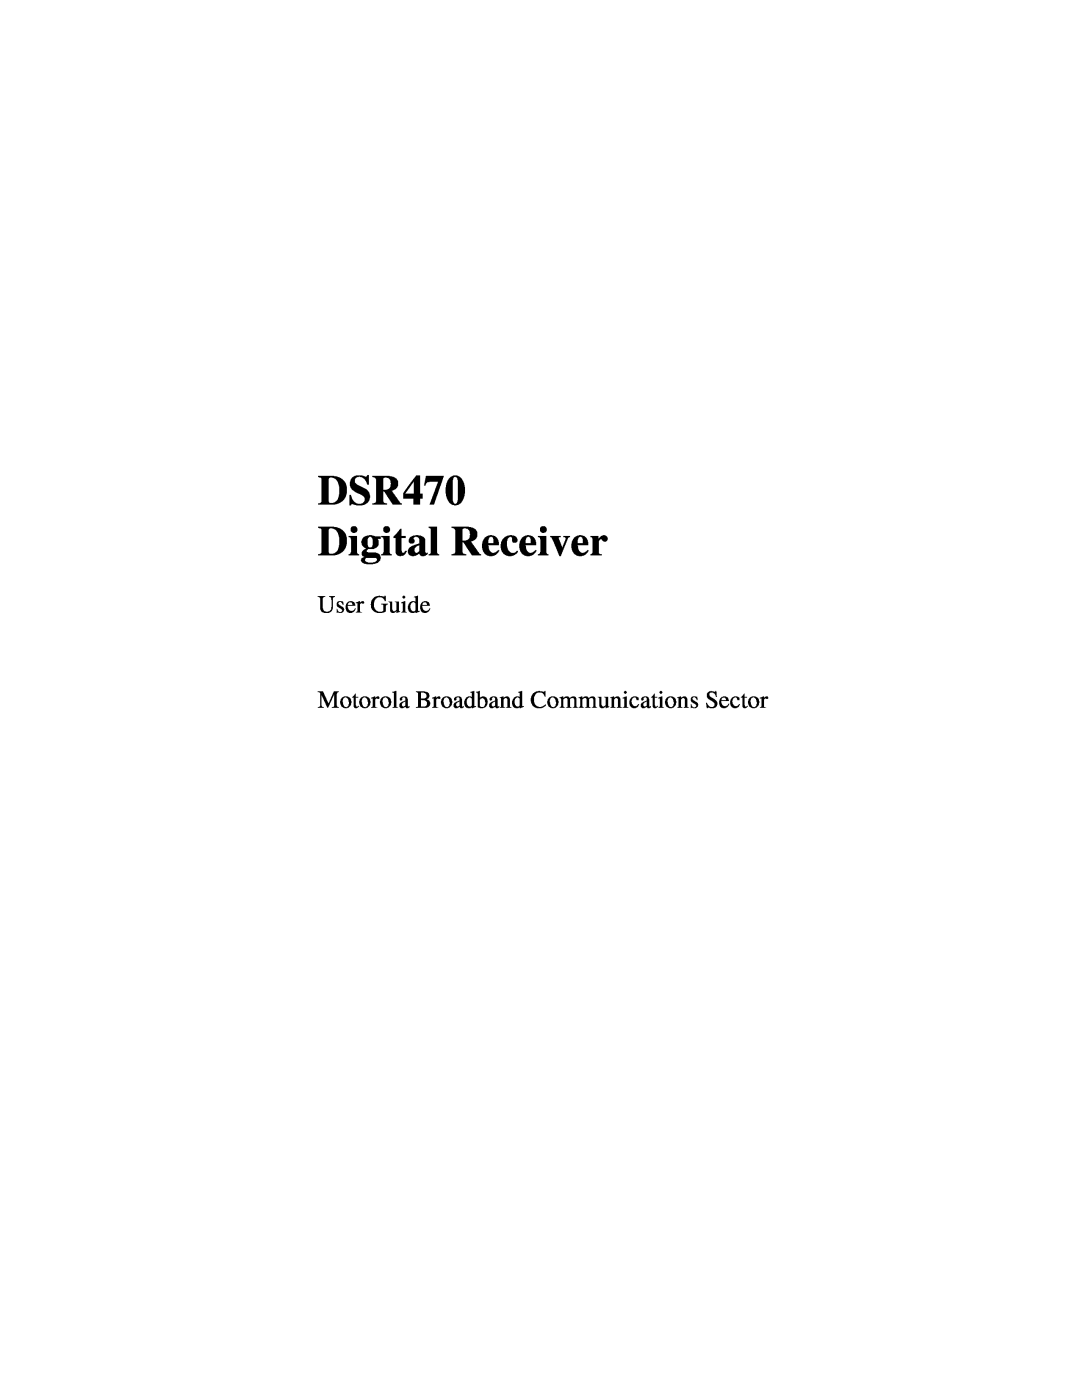 Univex manual DSR470 Digital Receiver, User Guide, Motorola Broadband Communications Sector 